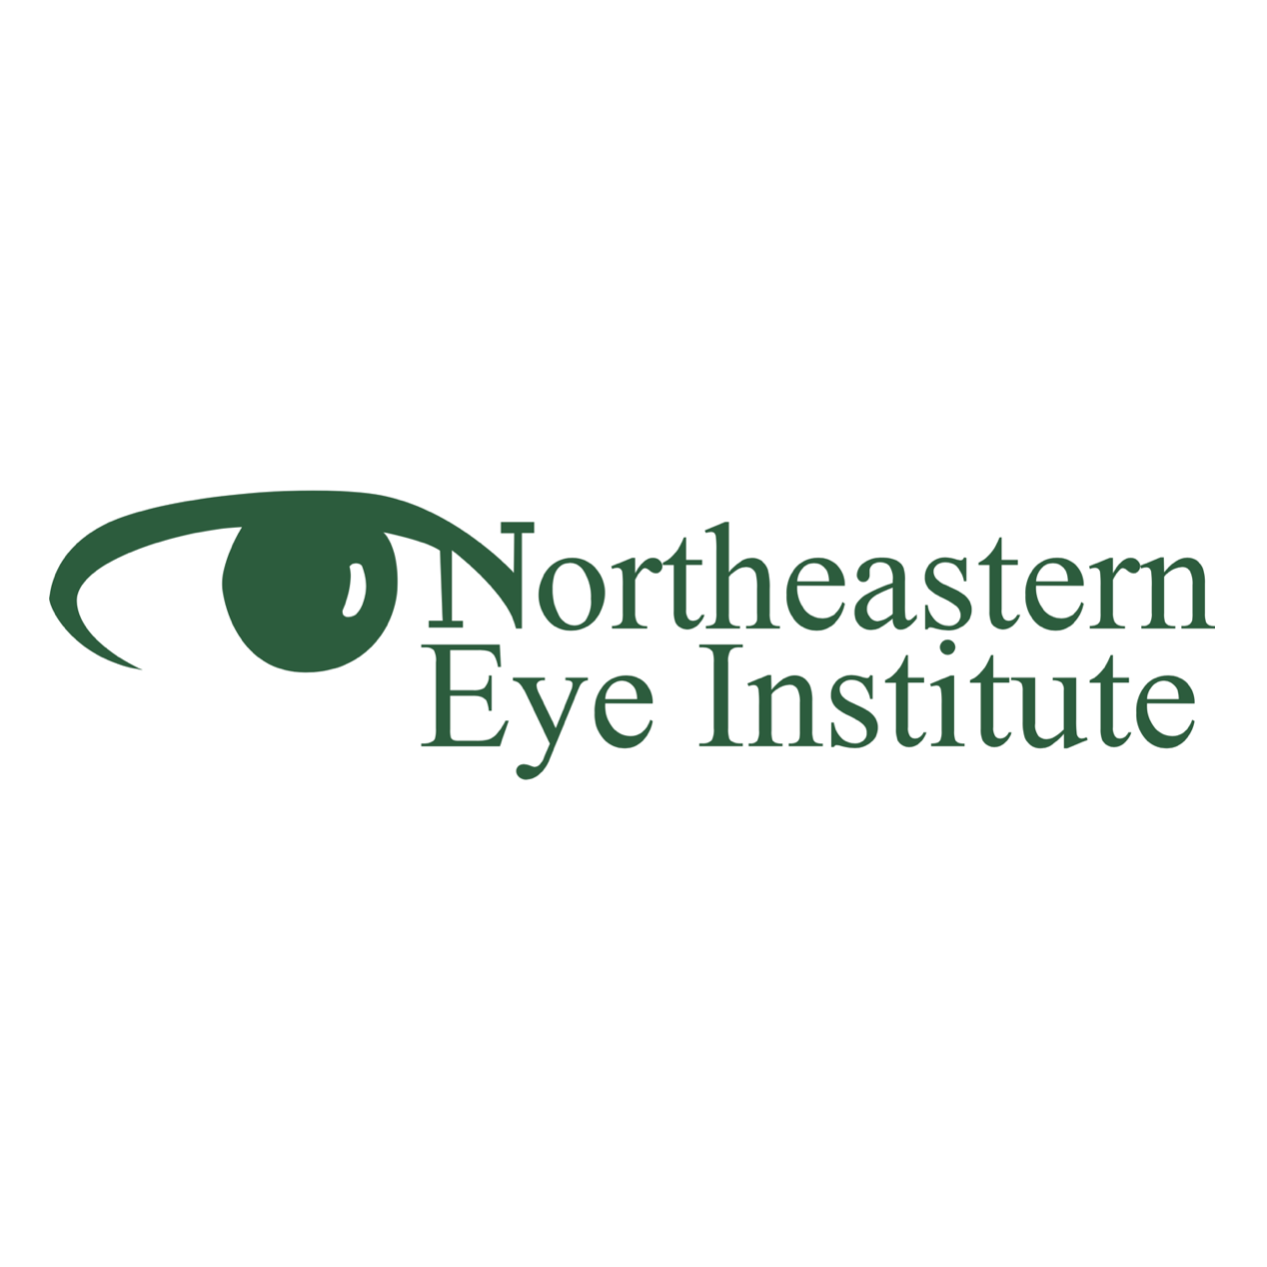 Northeastern Eye Institute - Pittston, PA 18640 - (570)654-1641 | ShowMeLocal.com